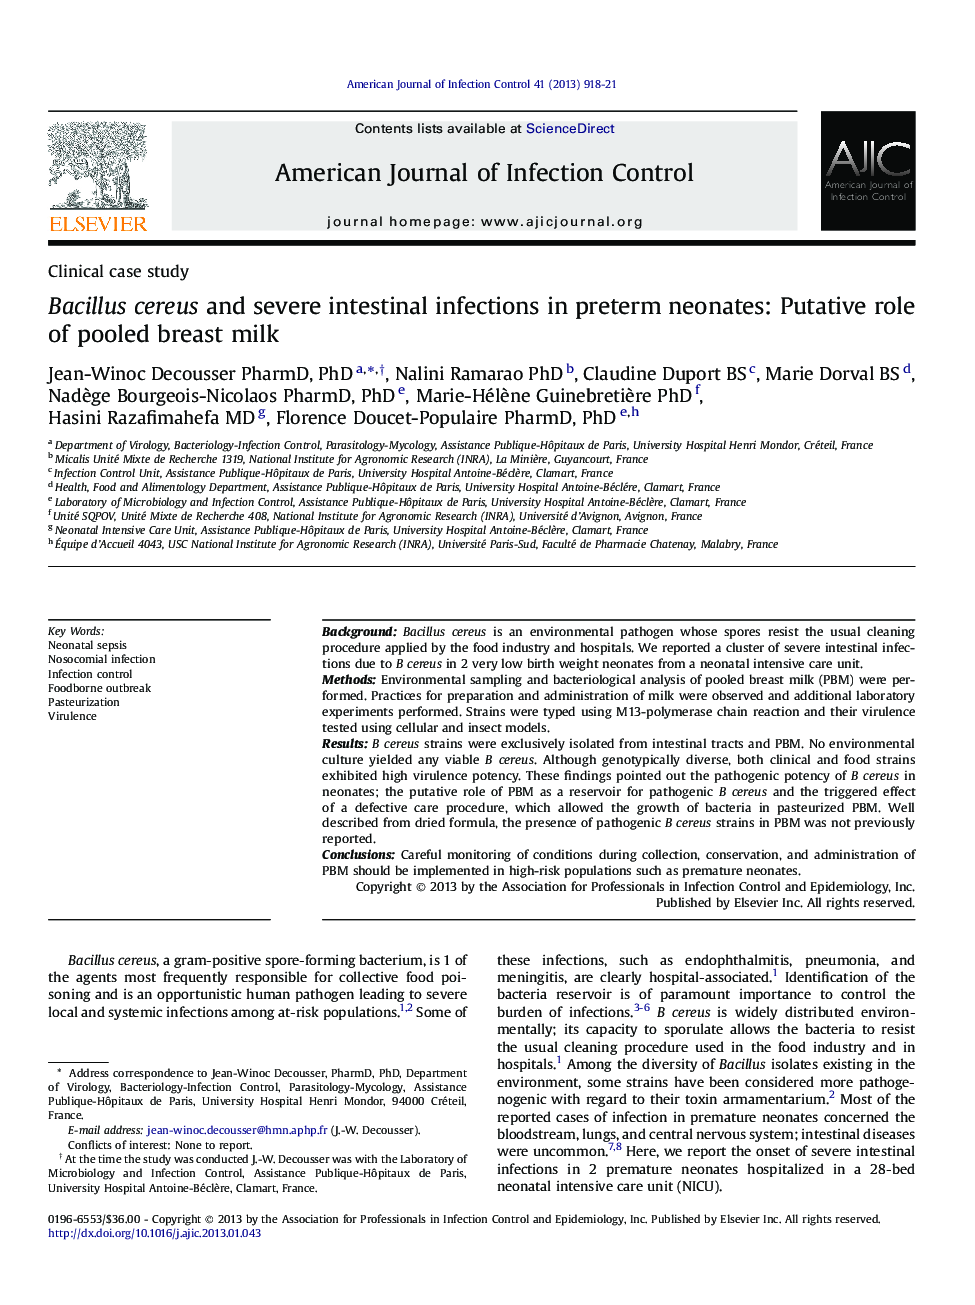 Bacillus cereus and severe intestinal infections in preterm neonates: Putative role of pooled breast milk 